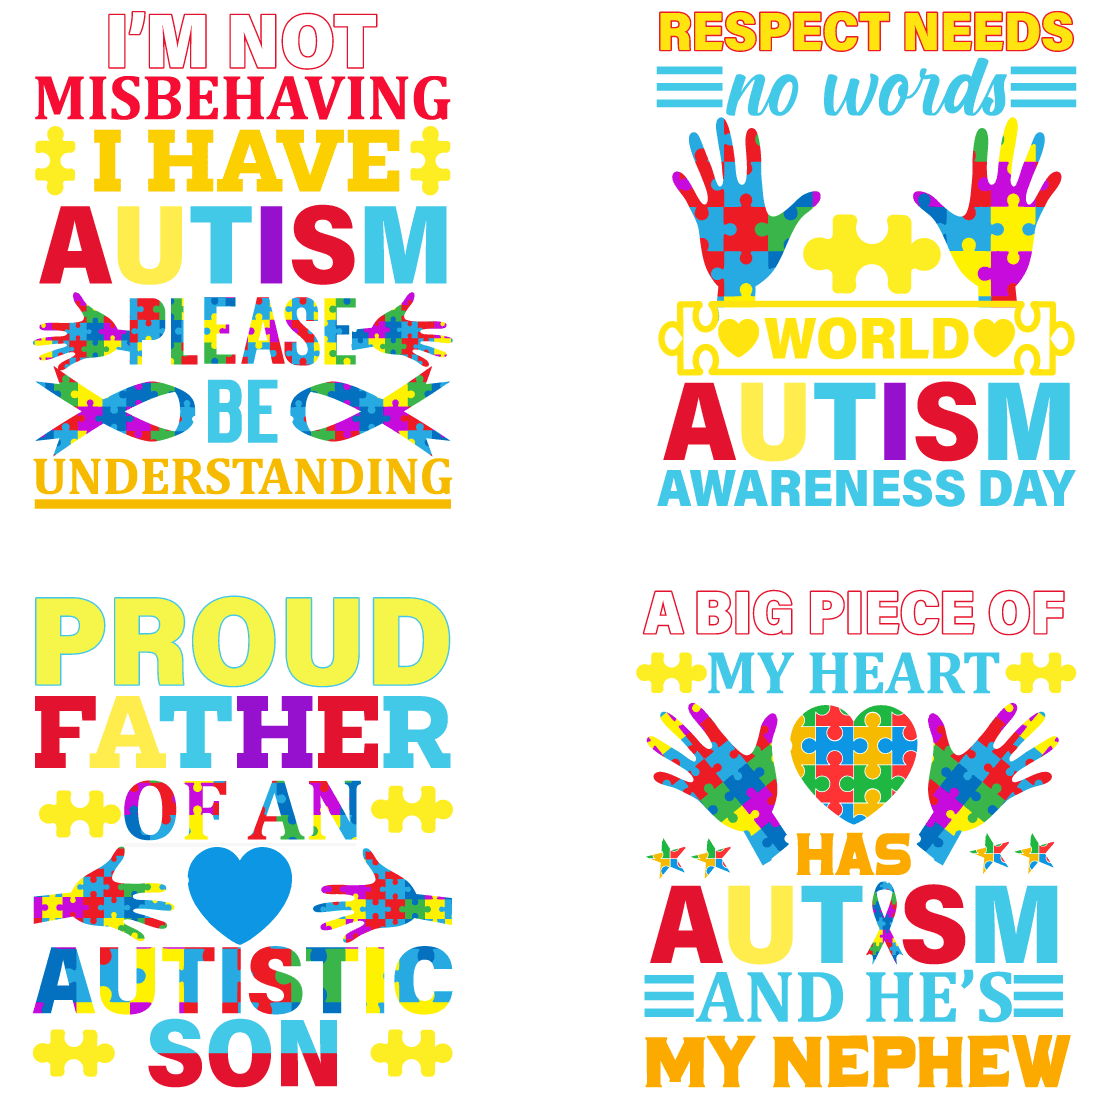 Autism Awareness day t-shirt design preview image.